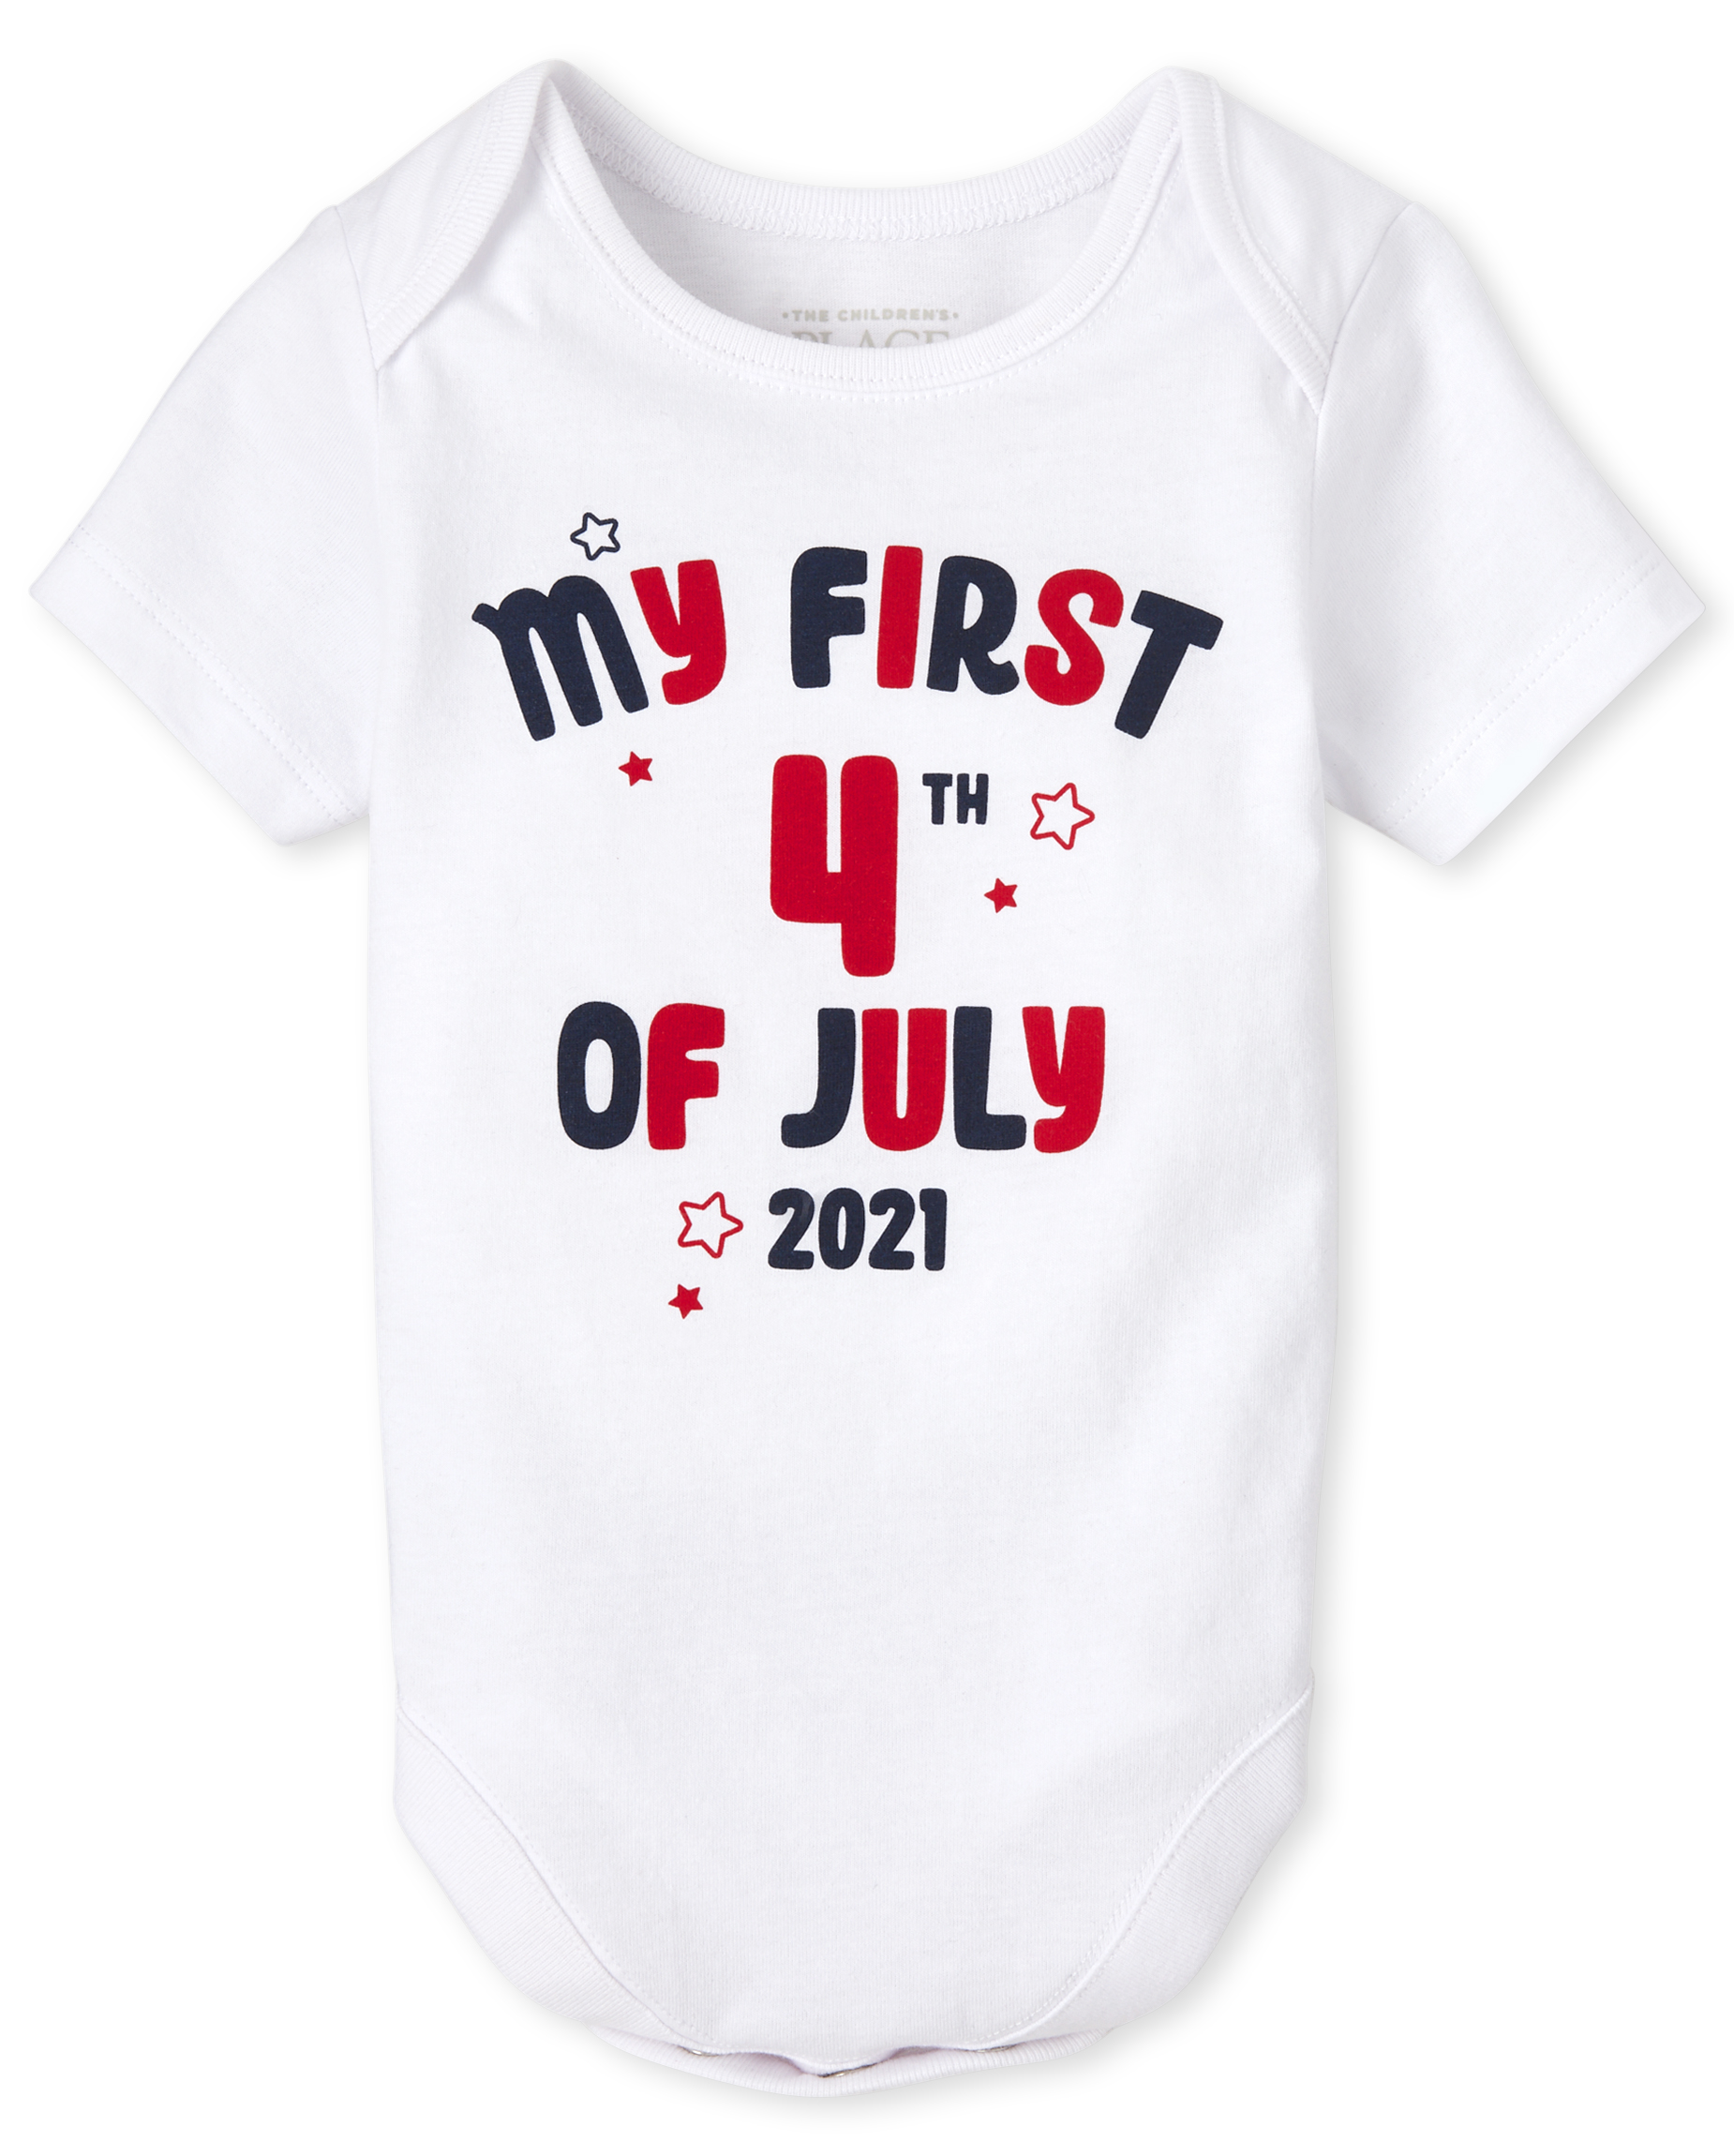 20 Best Baby Clothes Brands 2022   Healthline Parenthood